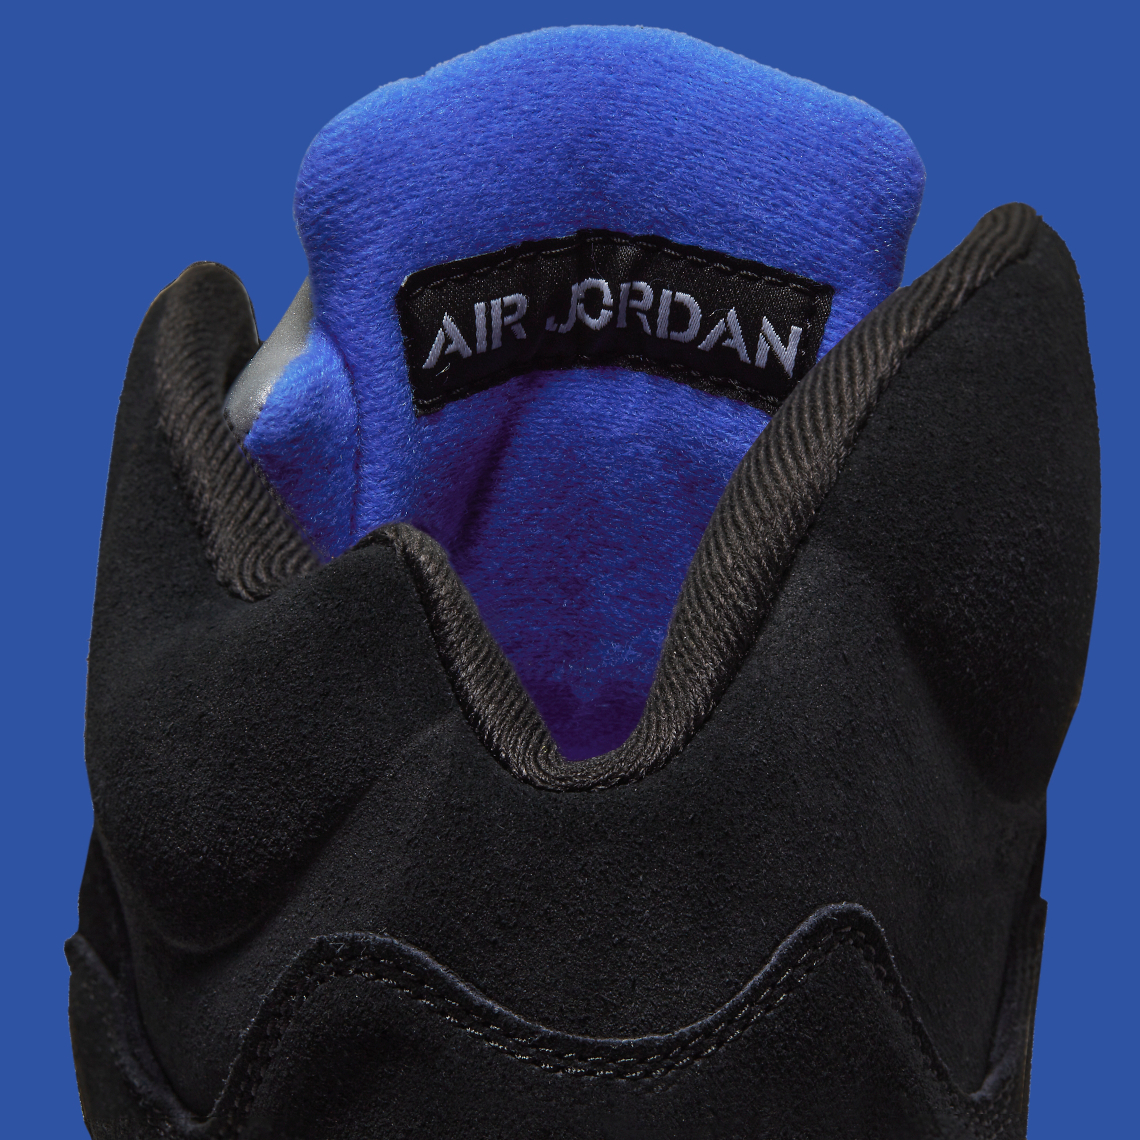 Jordan Brand looks to set the bar higher with their Air Jordan Racer Blue Ct4838 004 4 1